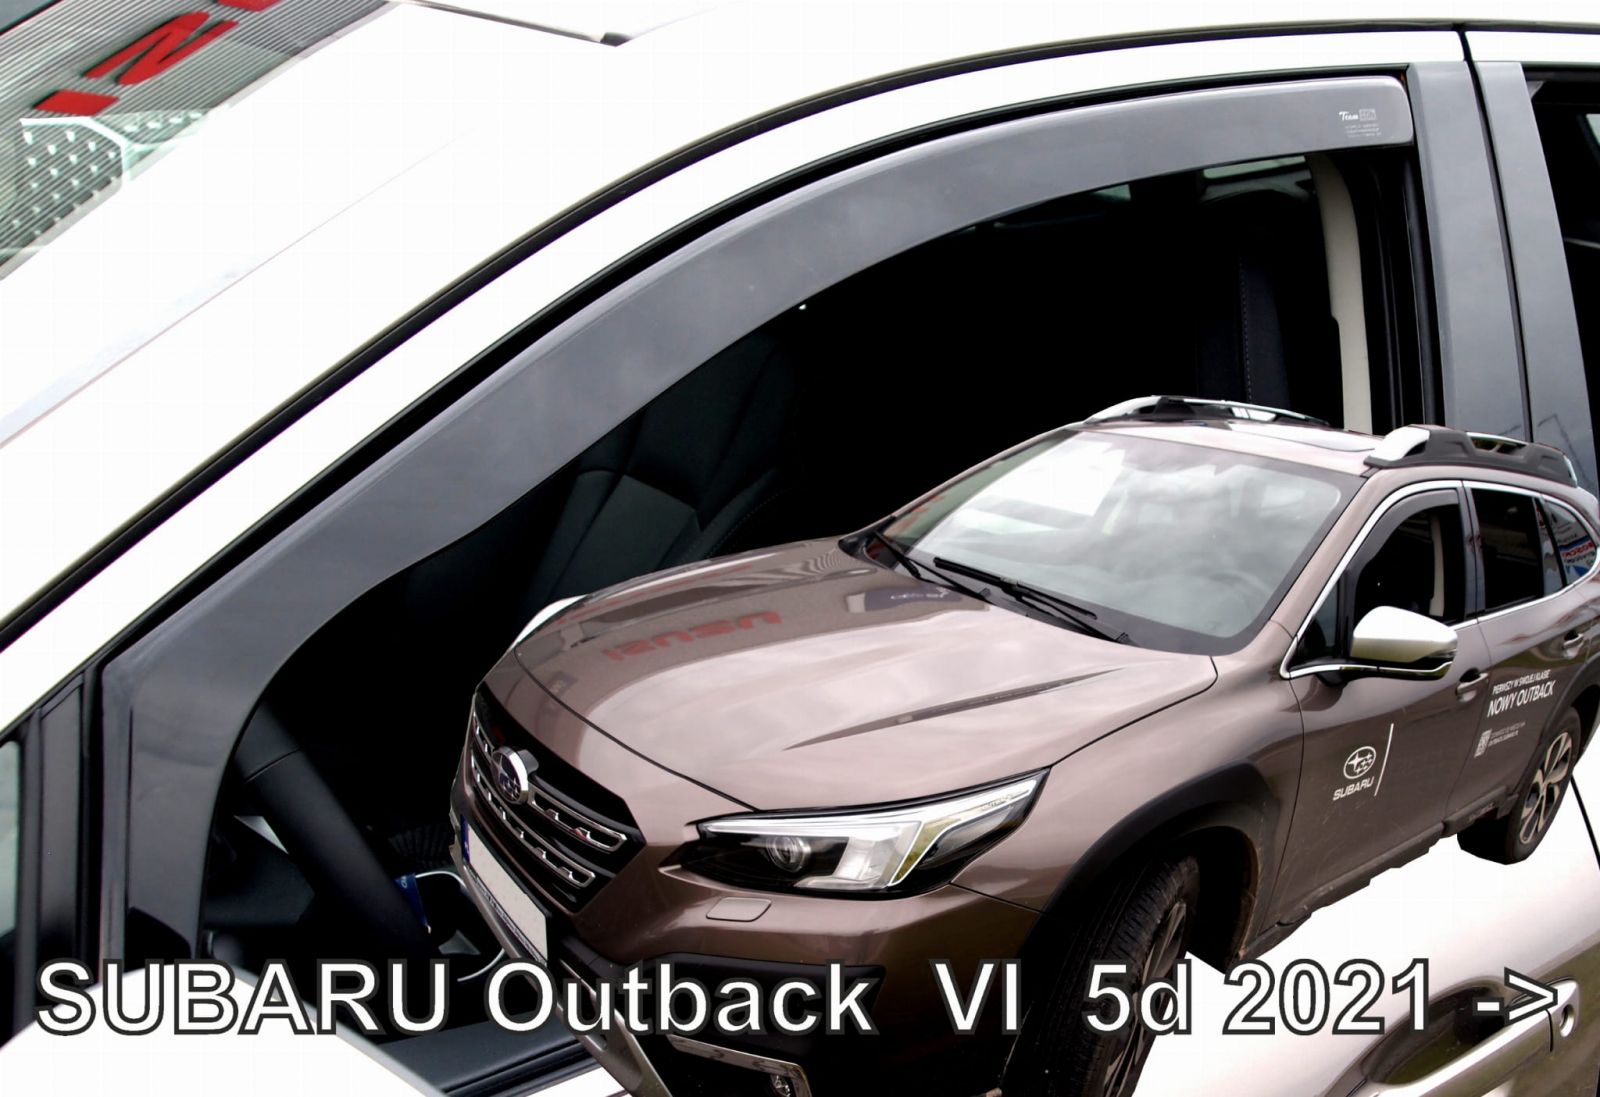 Ofuky oken Subaru Outback VI 5D 21R HDT